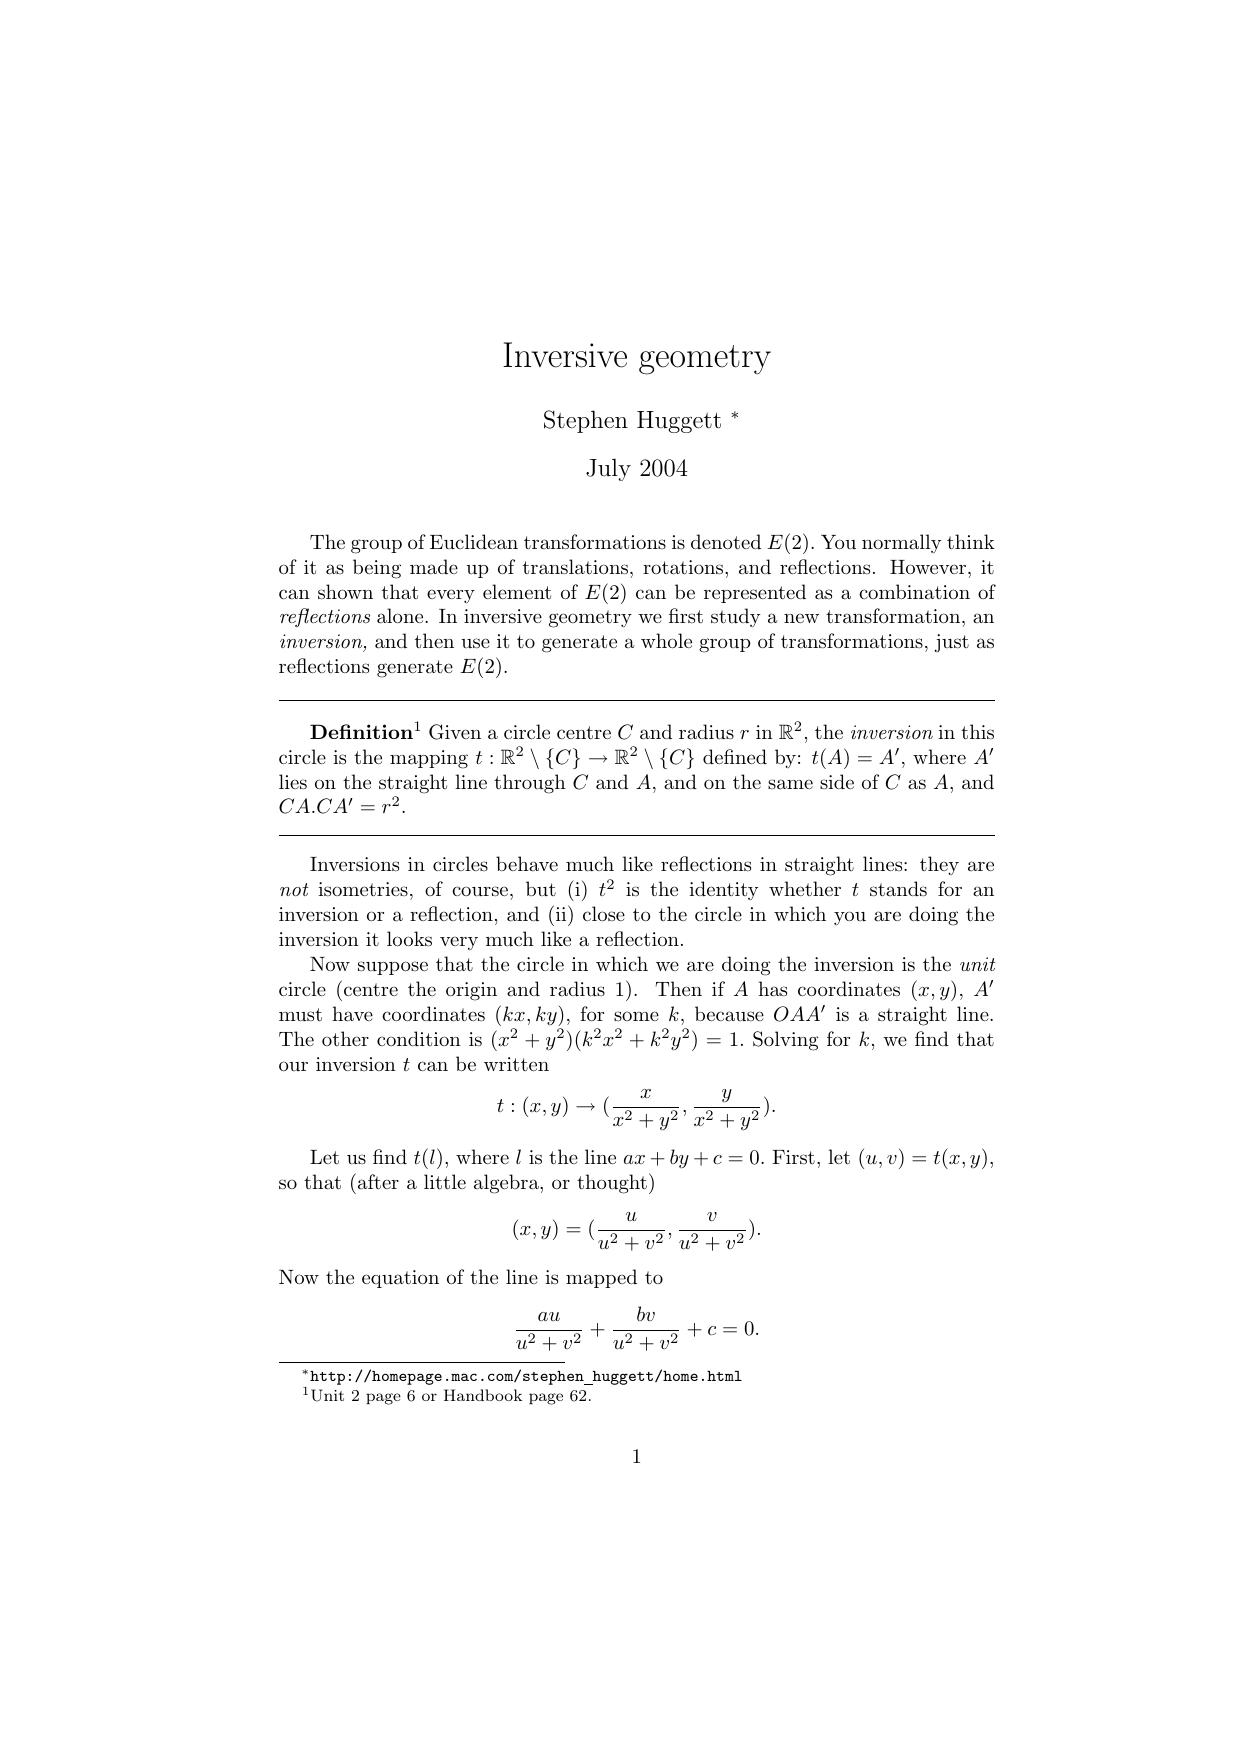 Inversive Geometry (Overview)